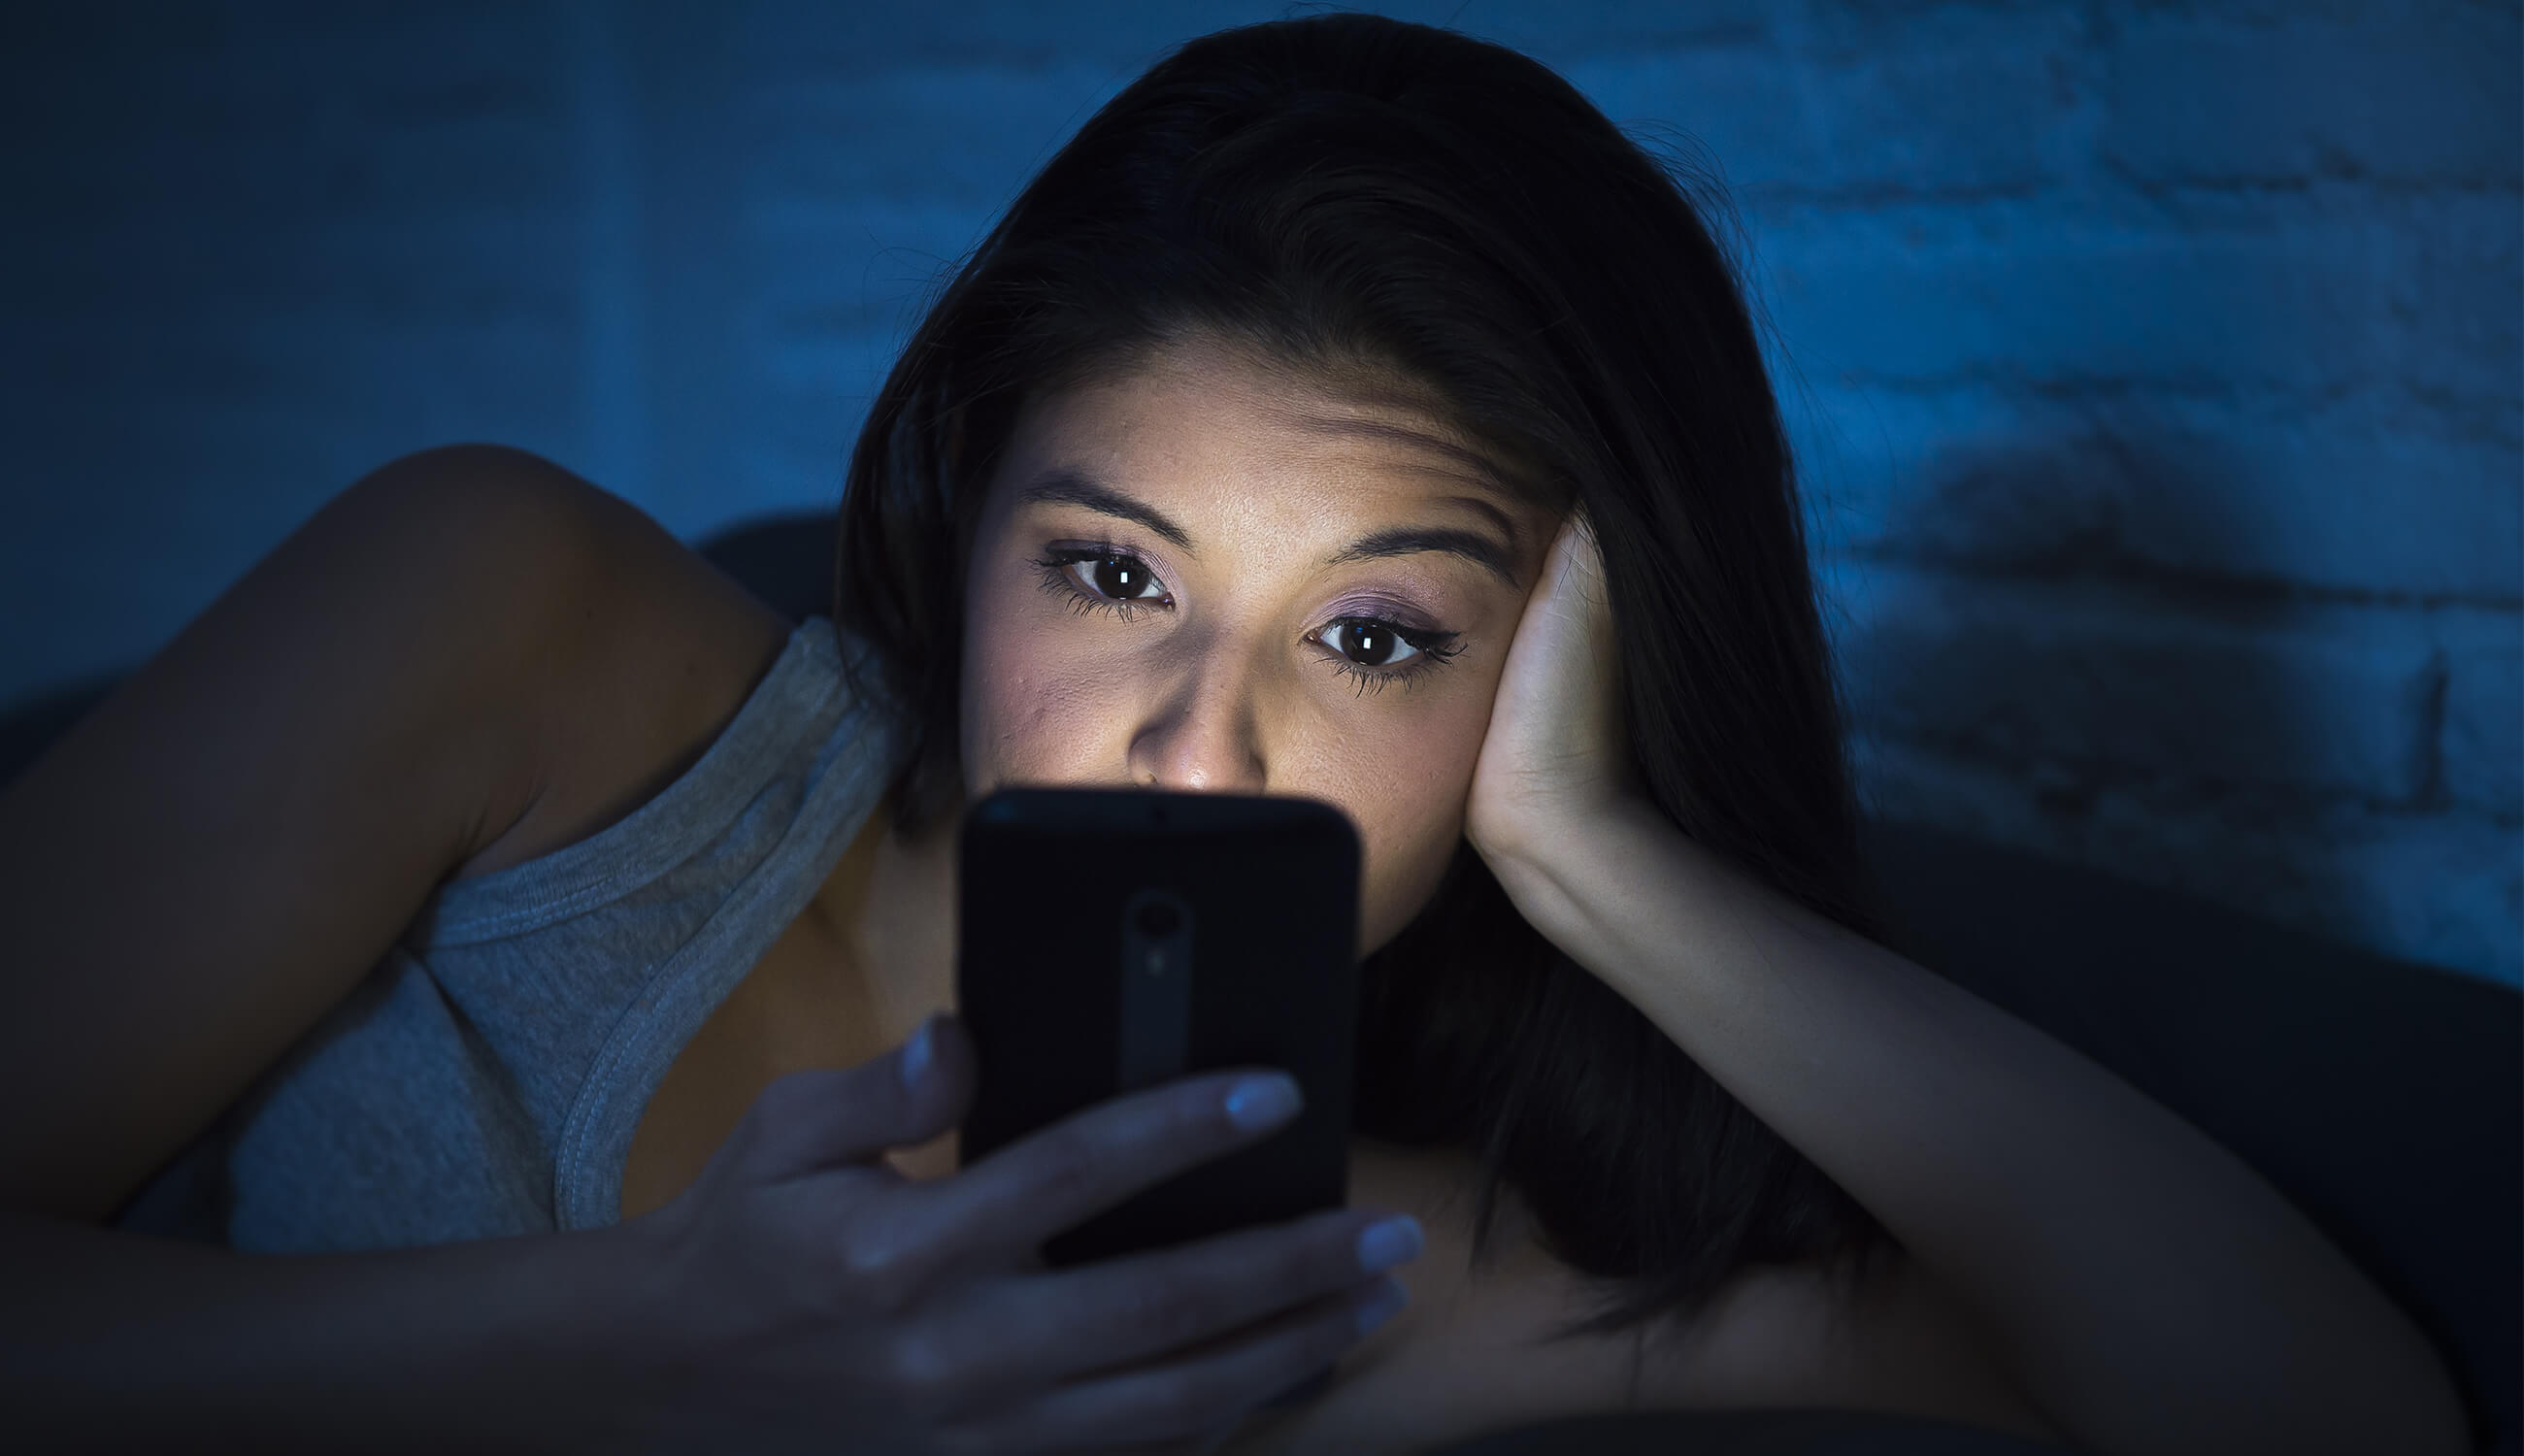 woman looking at phone in bed.jpg